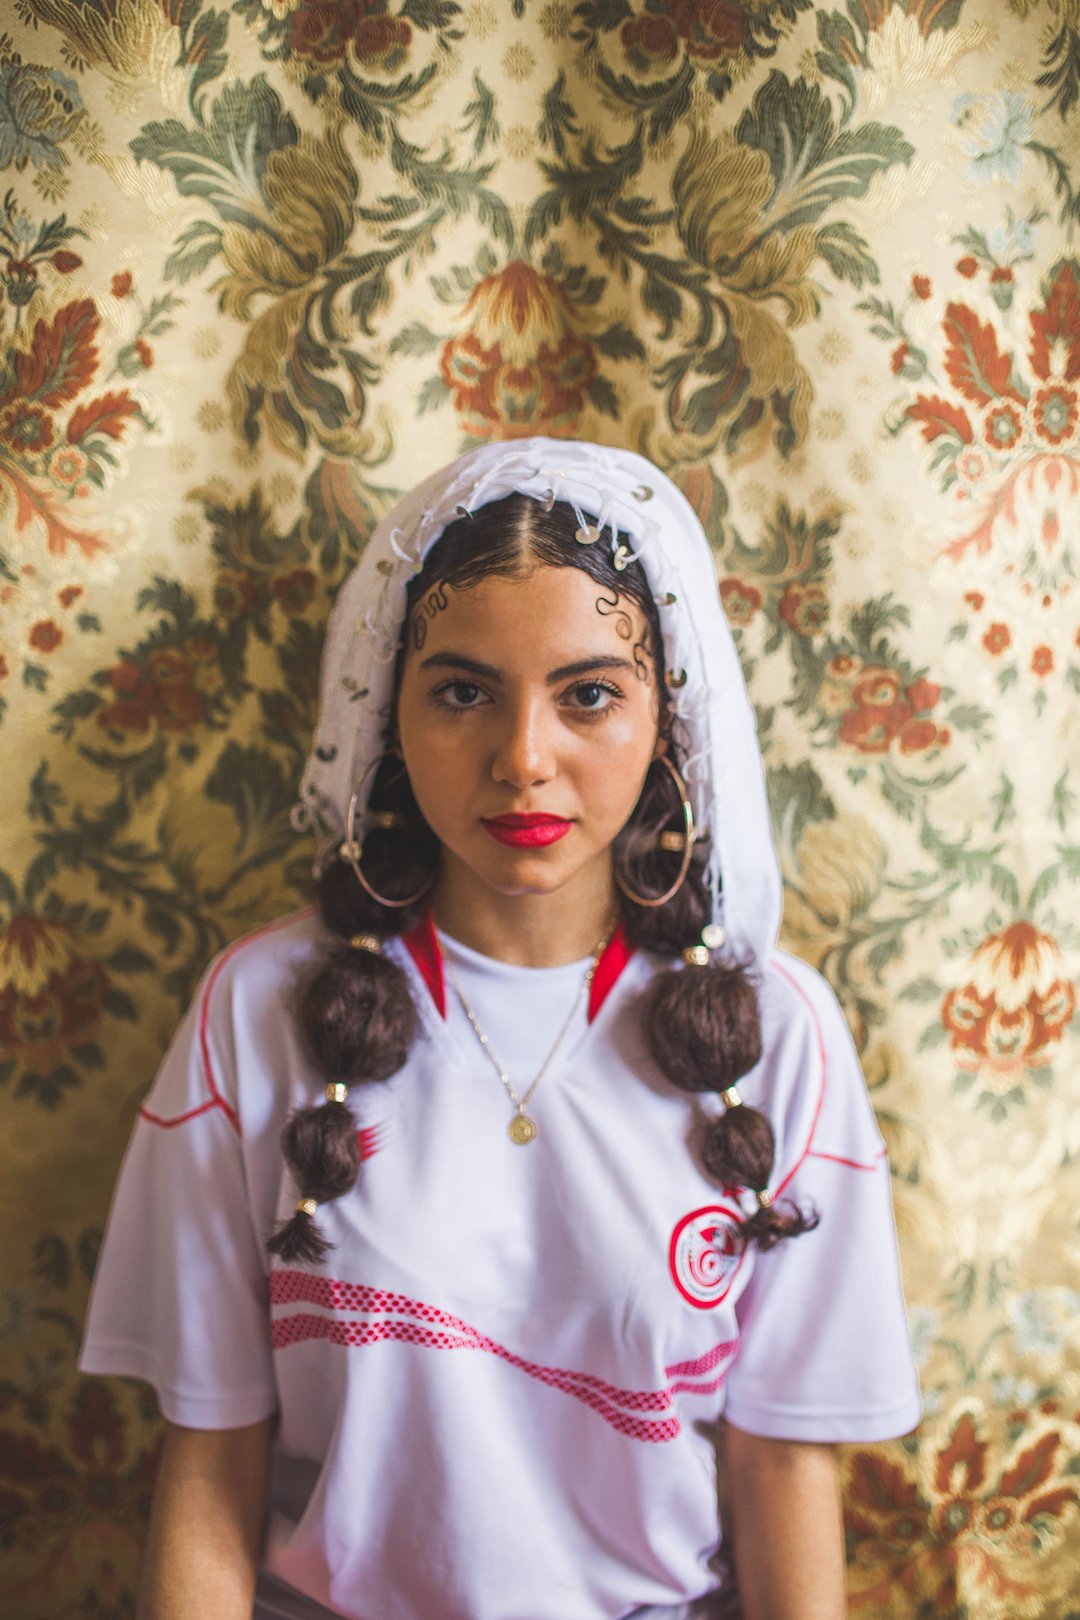 'Tunisia' photography by Dami Khadijah